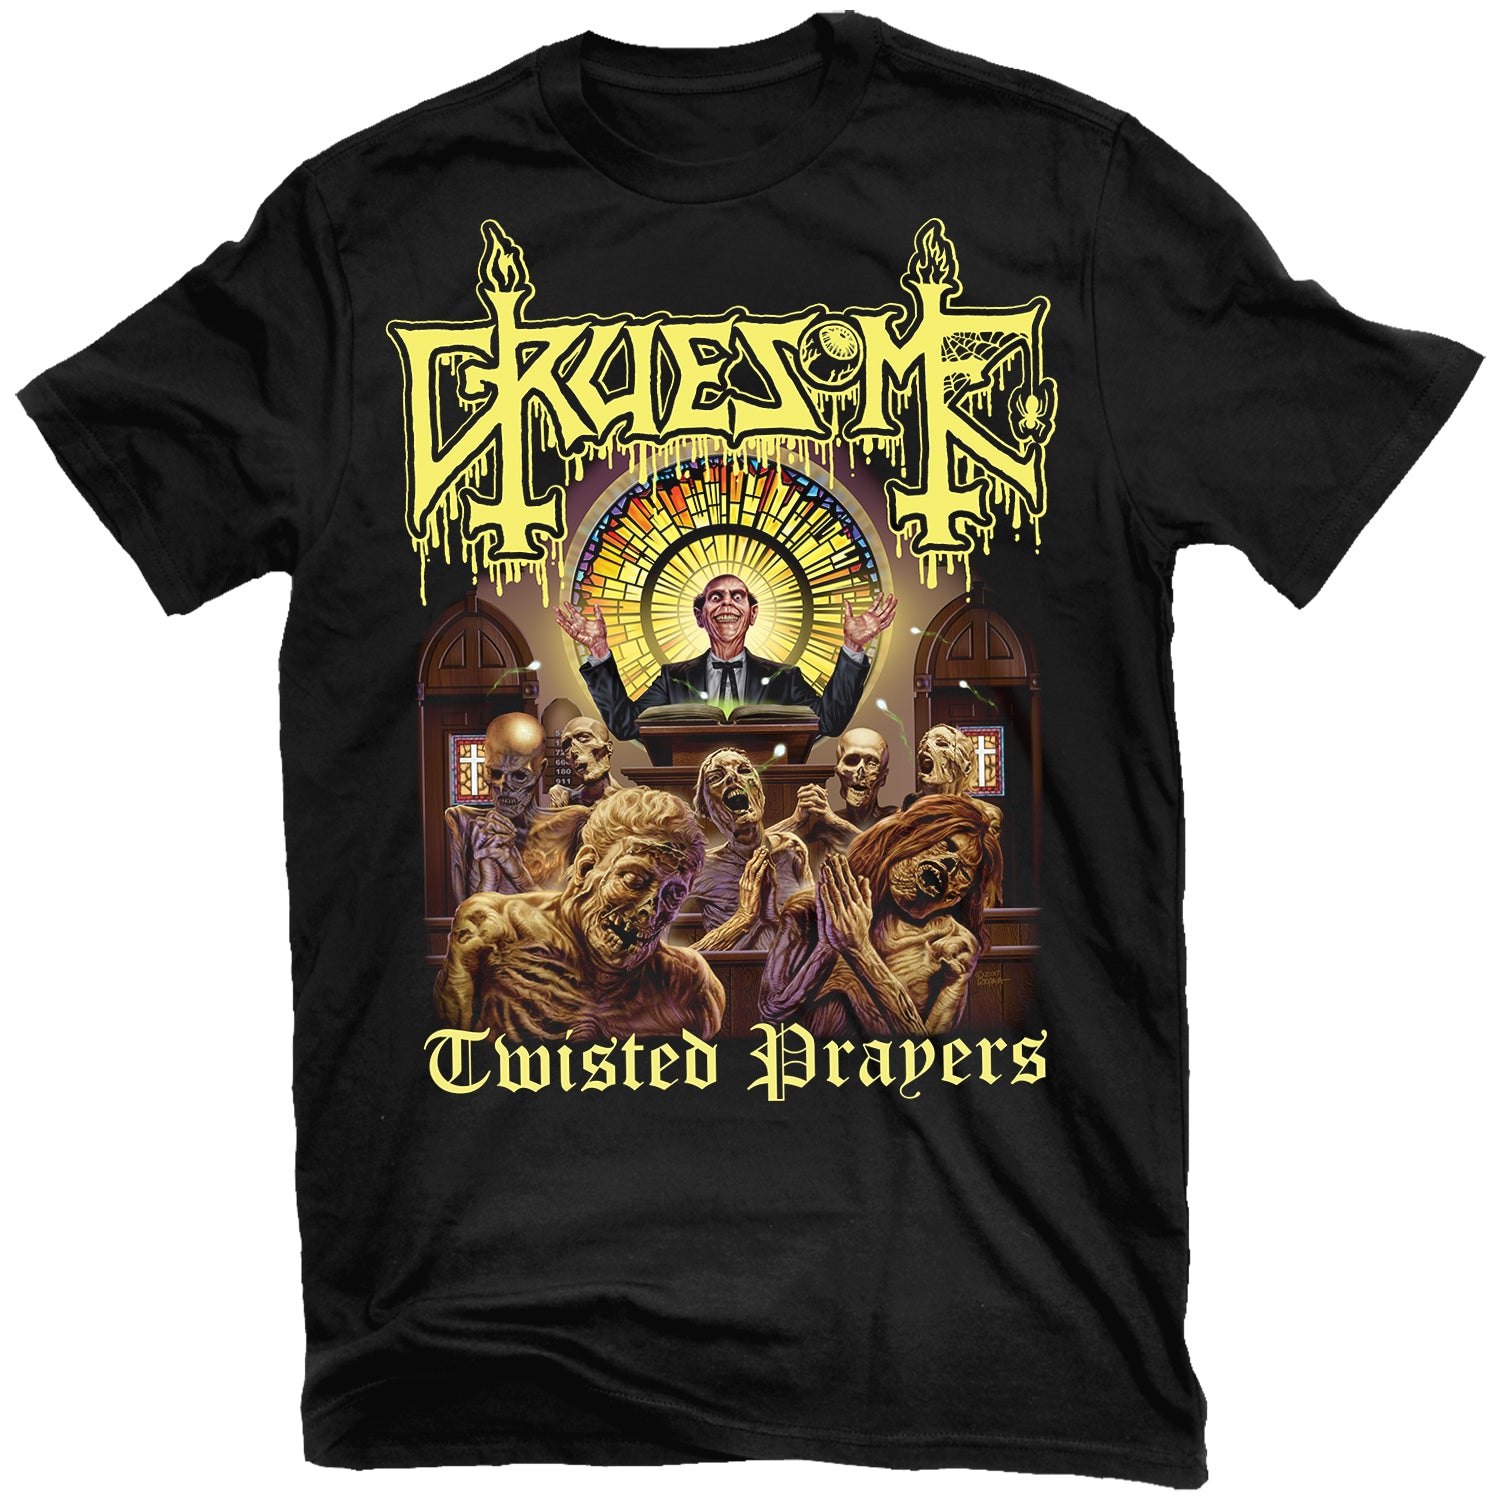 Gruesome "Twisted Prayers" T-Shirt